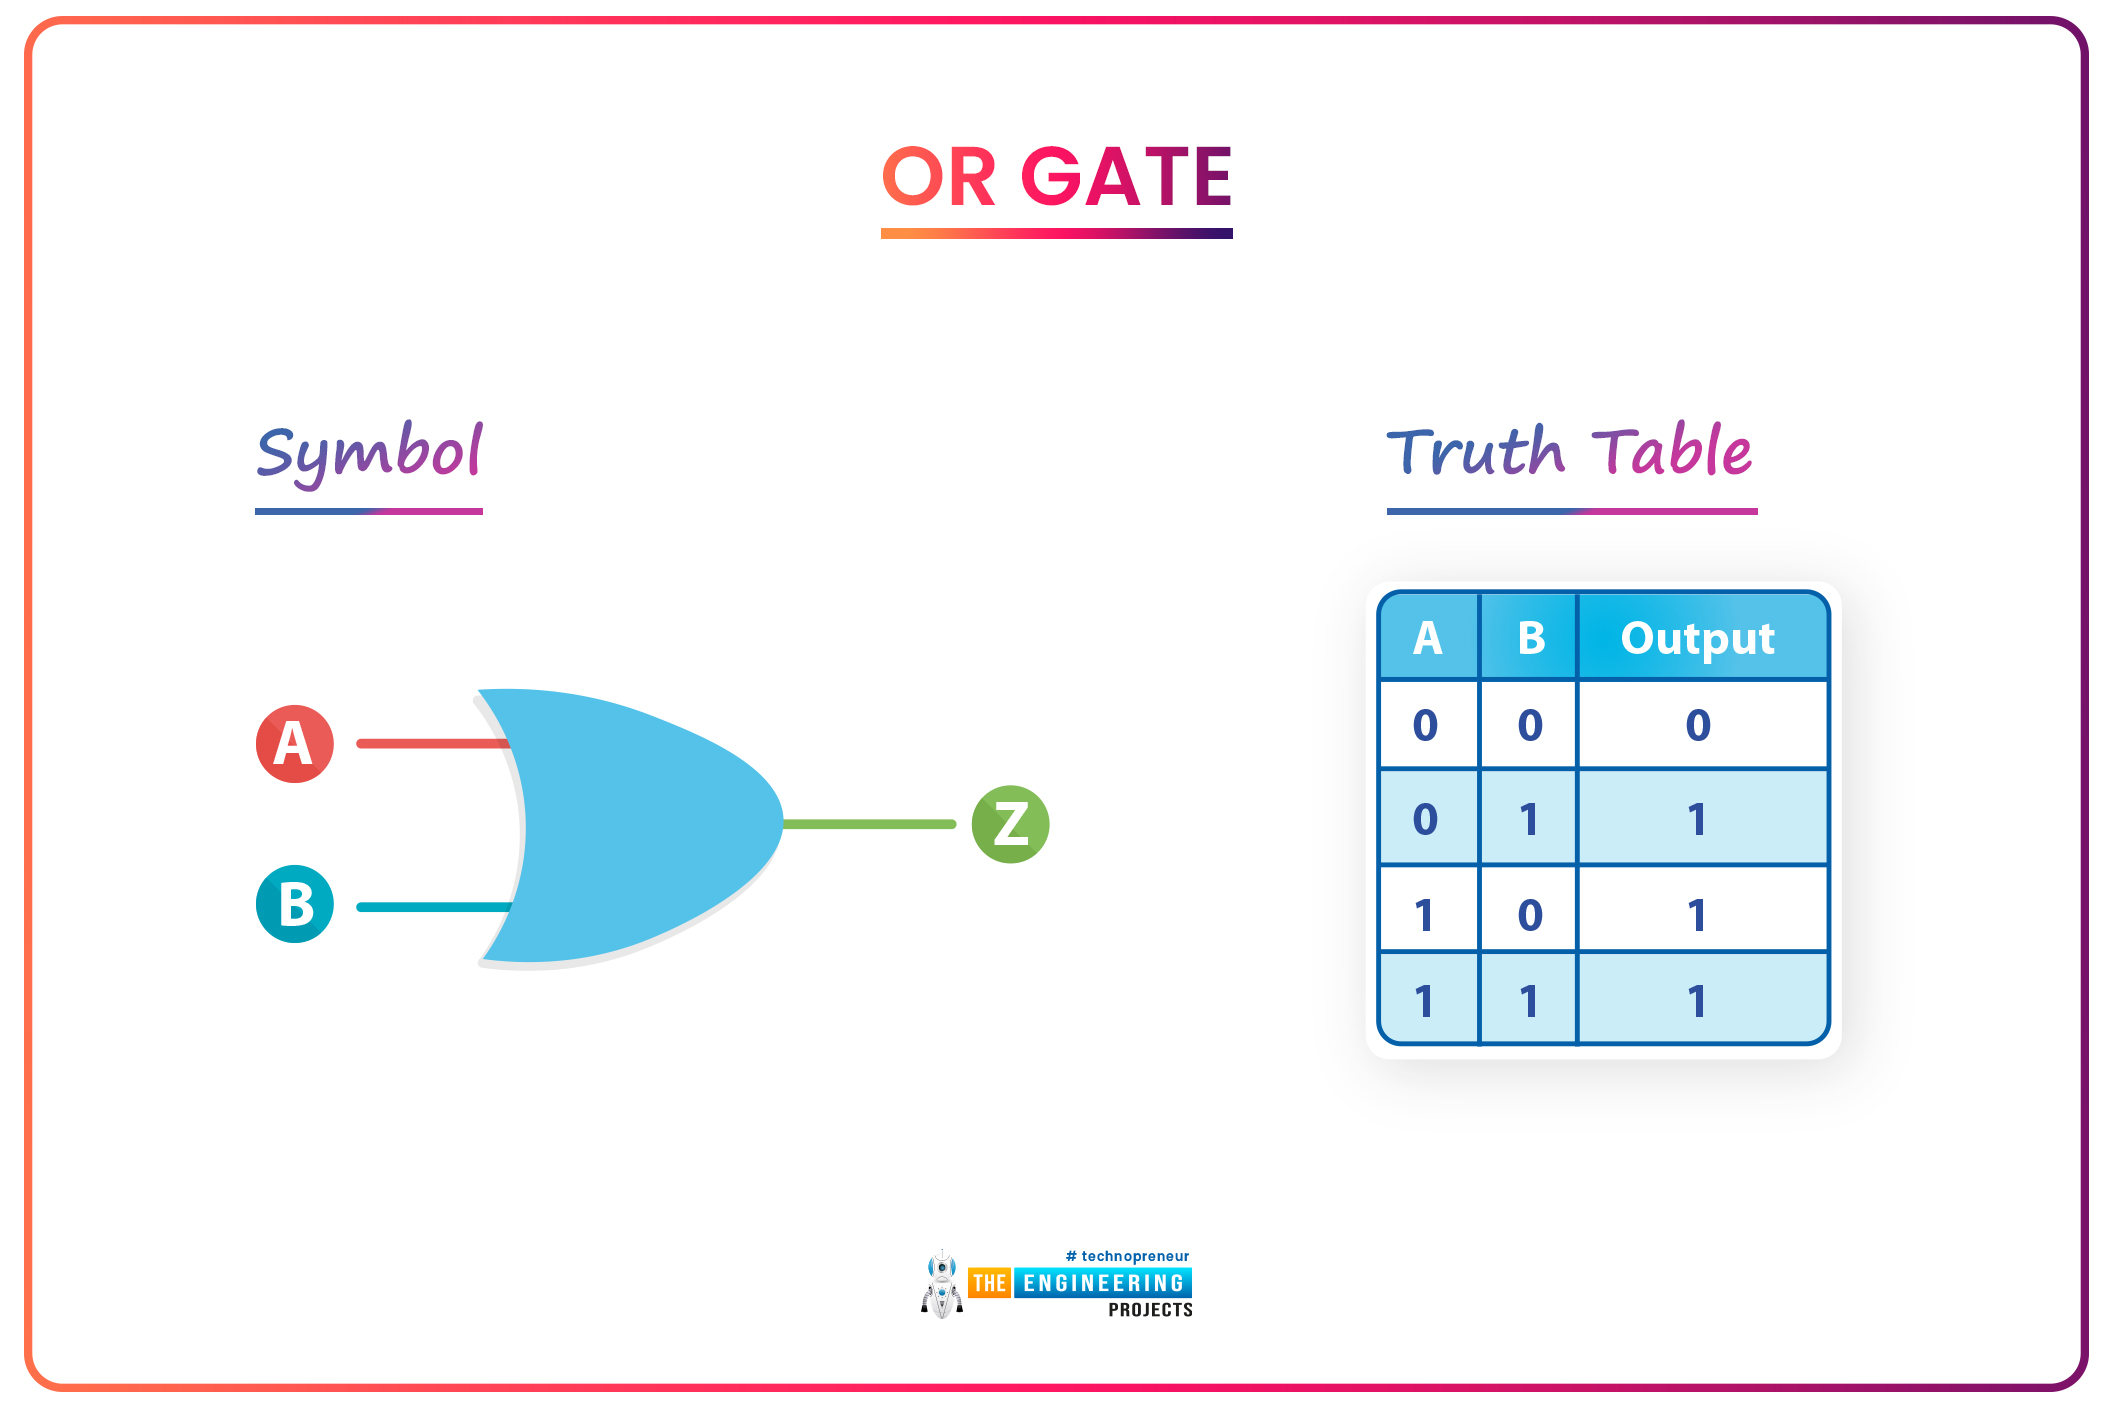 logic gates symbols, symbols of logic gates, Logic Gates, AND Gate, OR GATE,NOR Gate, NOT, GATE, Proteus implementation of gates